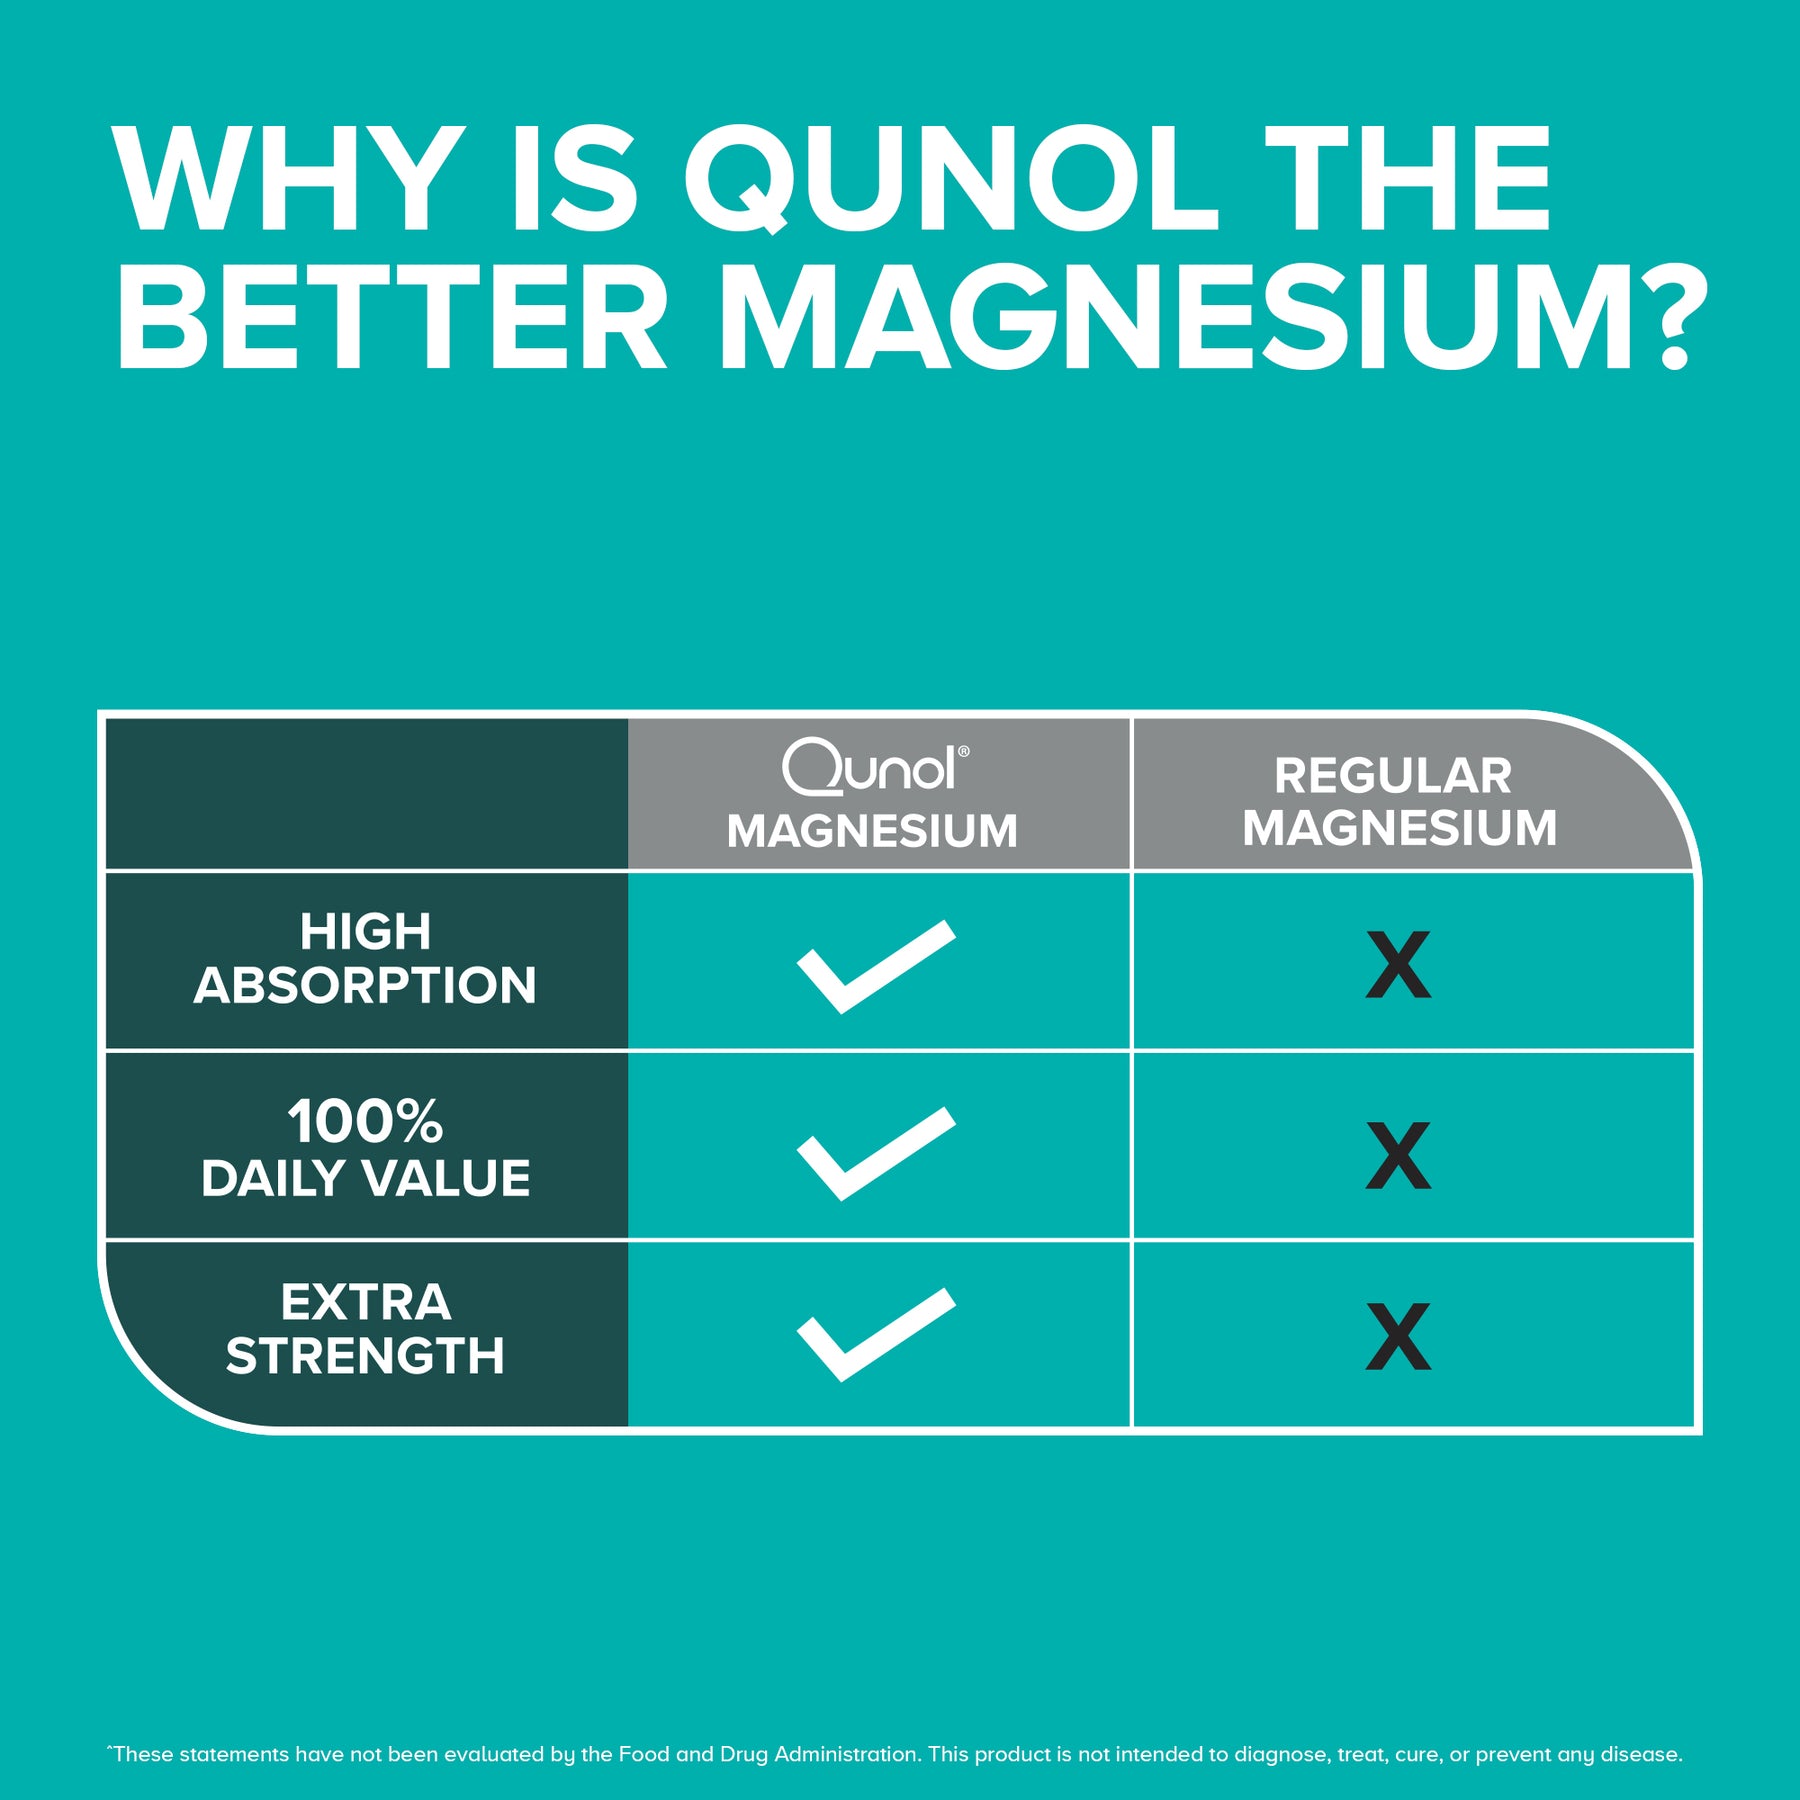 Extra Strength Magnesium, 420mg